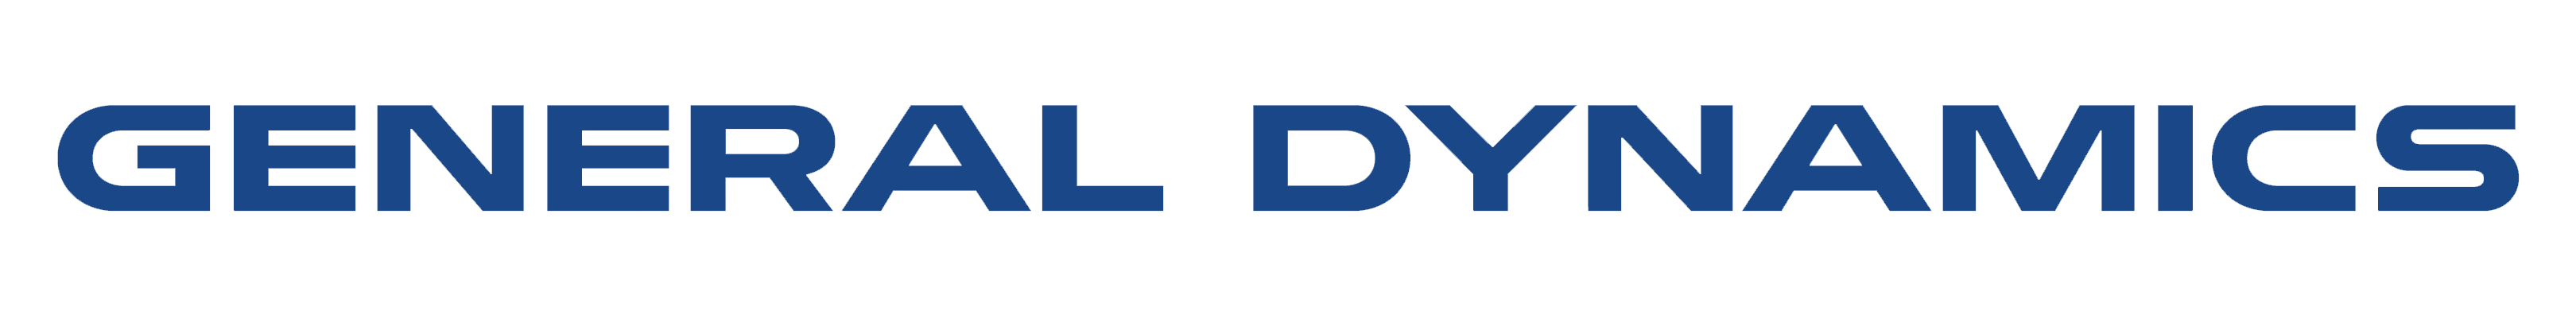 General Dynamics Brand Logo